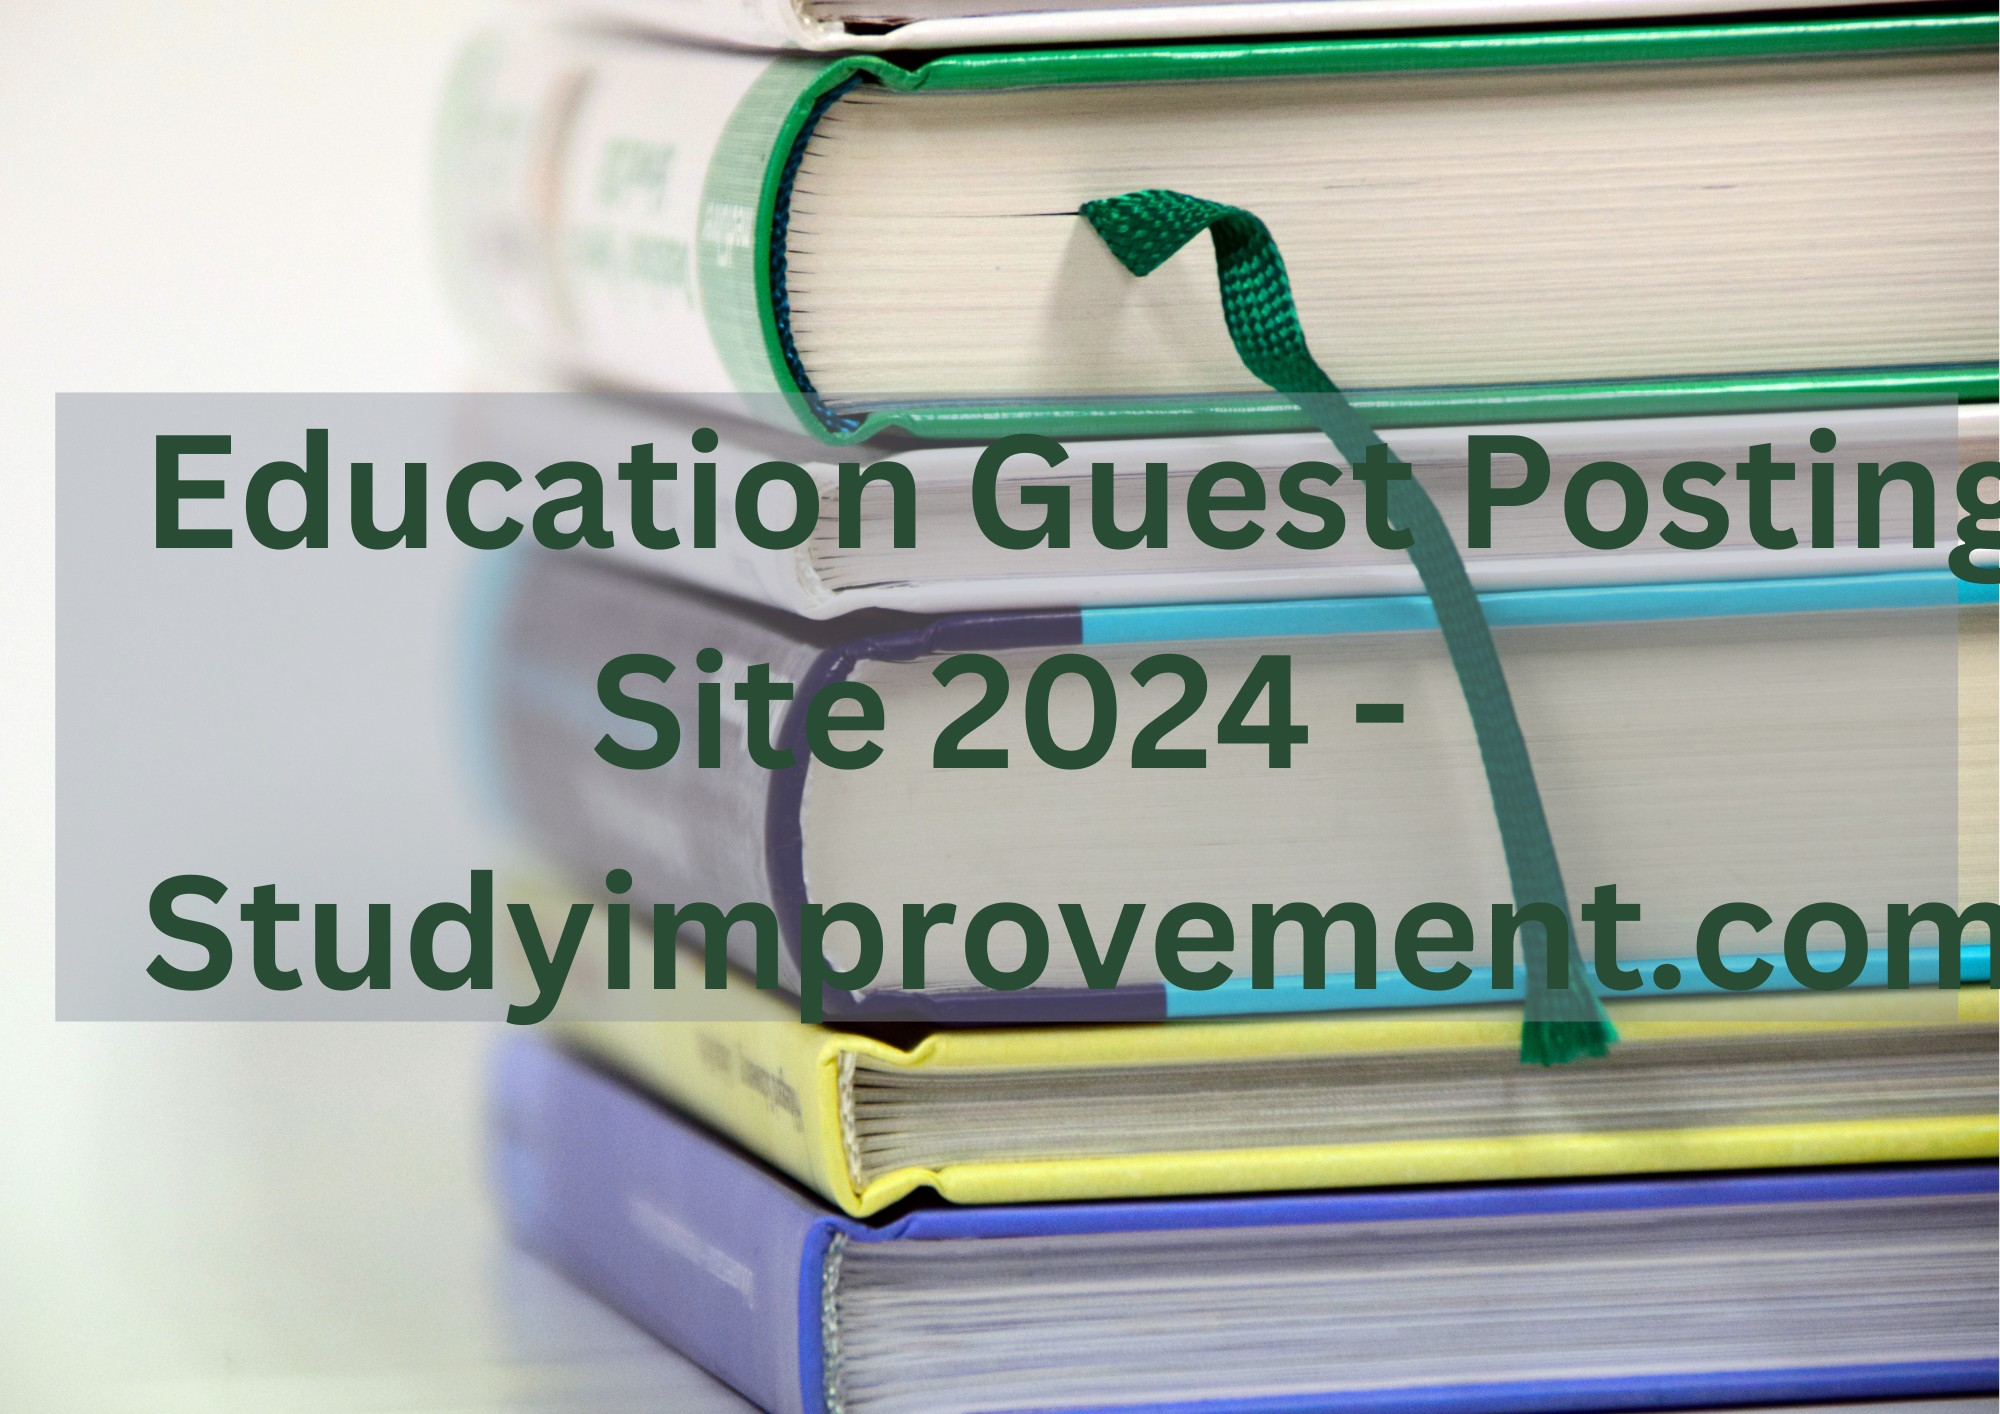 STUDYIMPROVEMENT.COM - EDUCATION GUEST POSTING SITE 2024